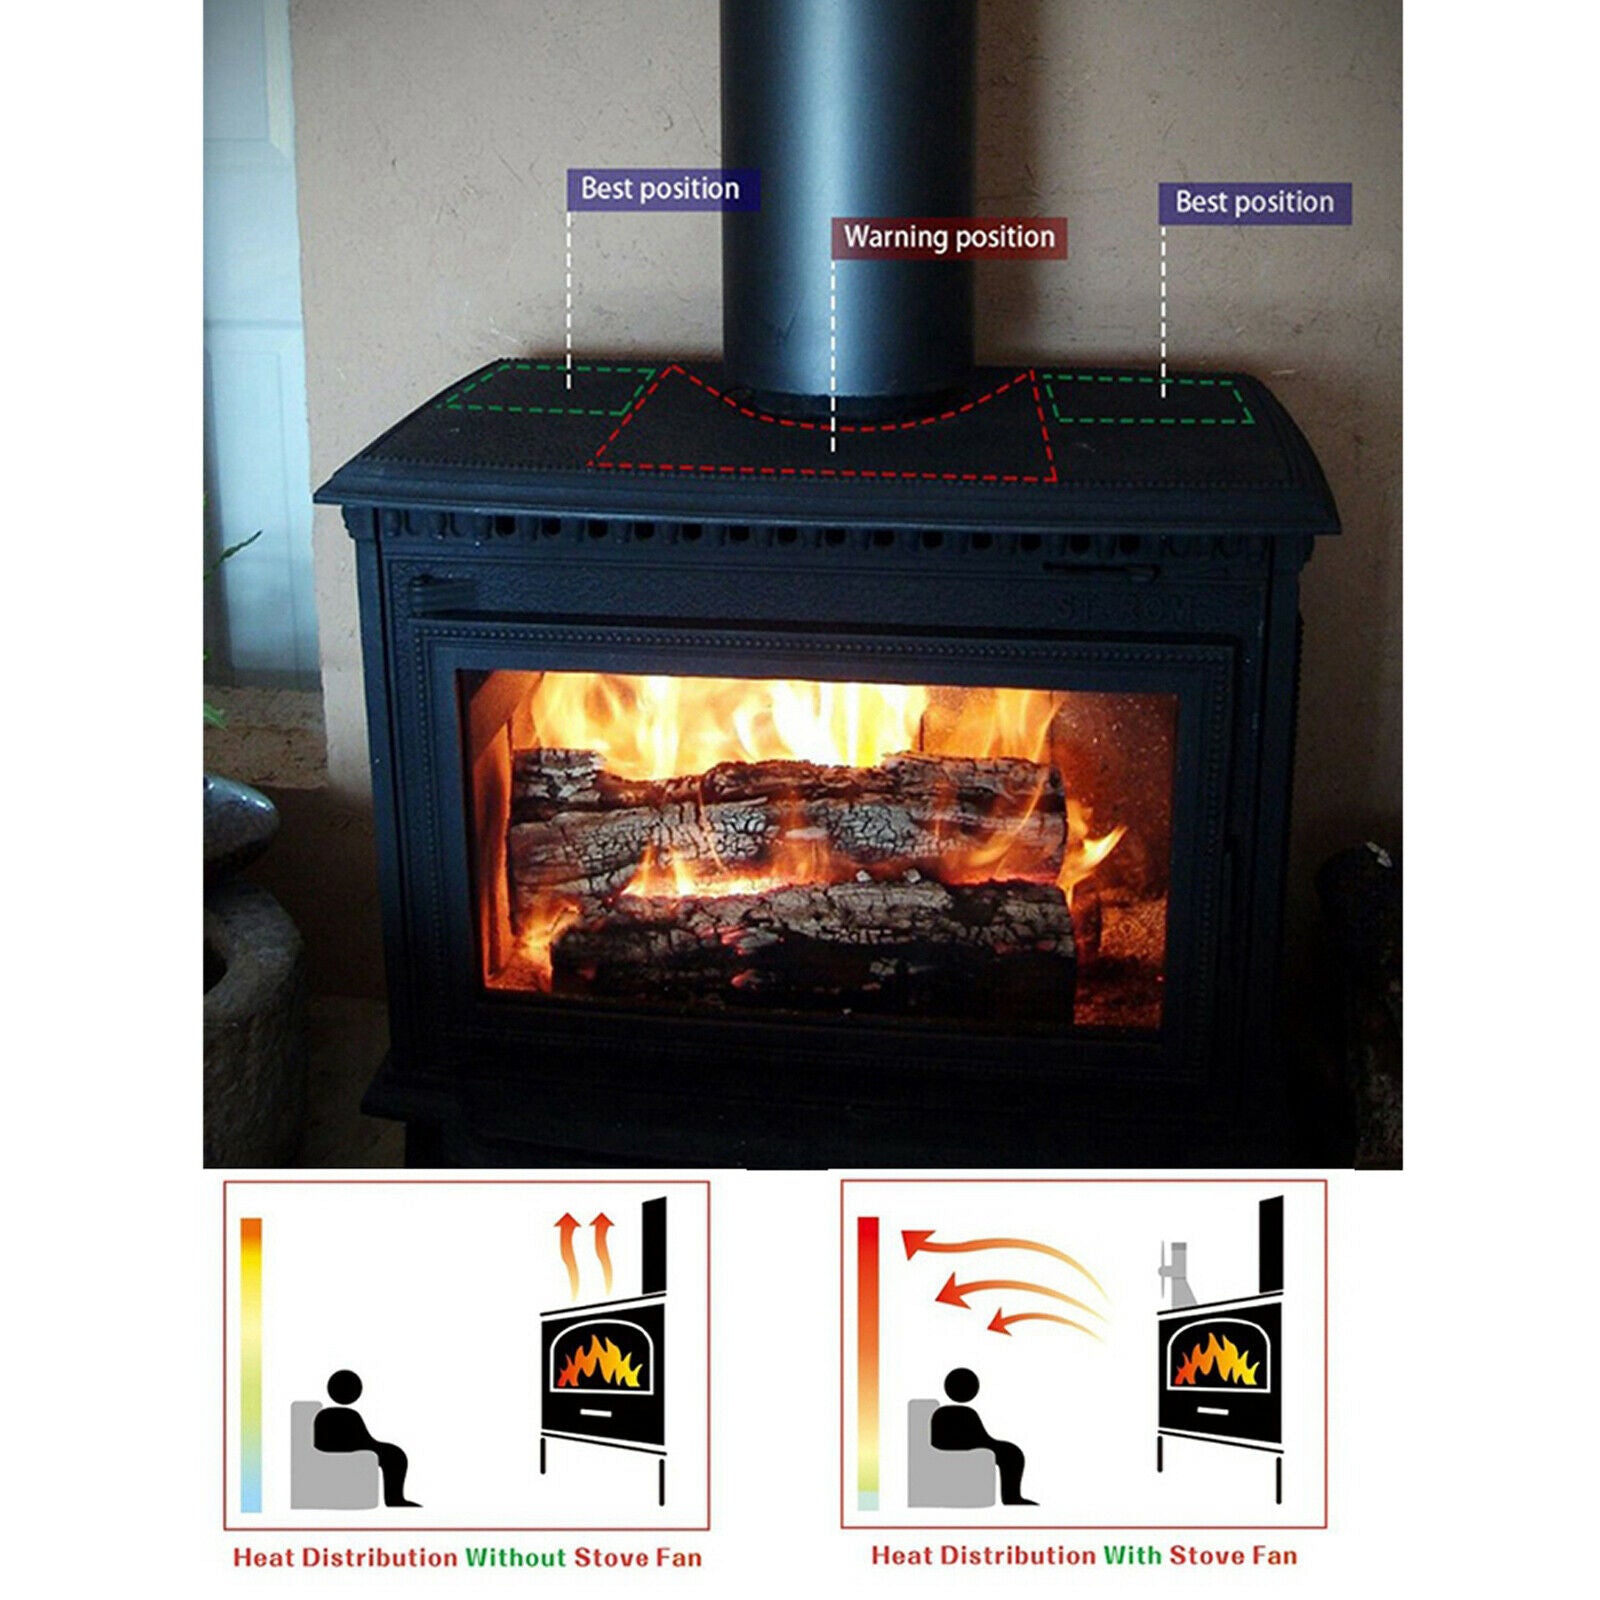 6 Blades Wood Burning Stove Fireplace Fan Silent Motors Heat Powered Golden